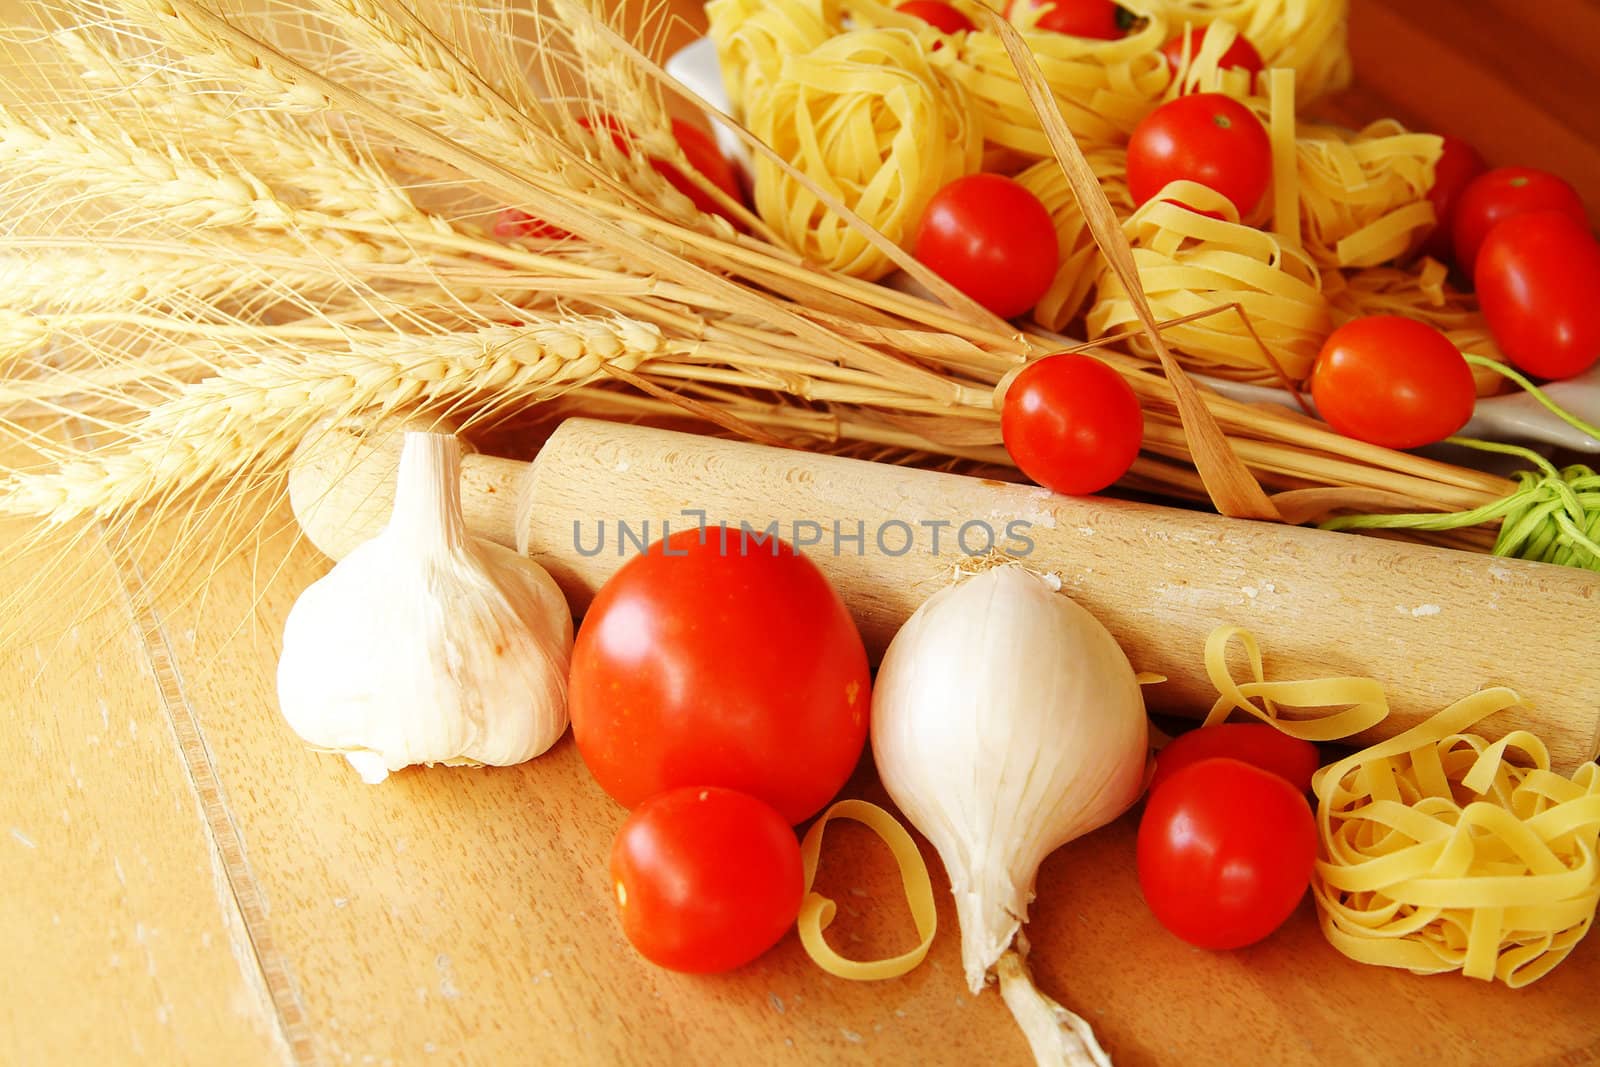 Garlic, onion and tomatoes